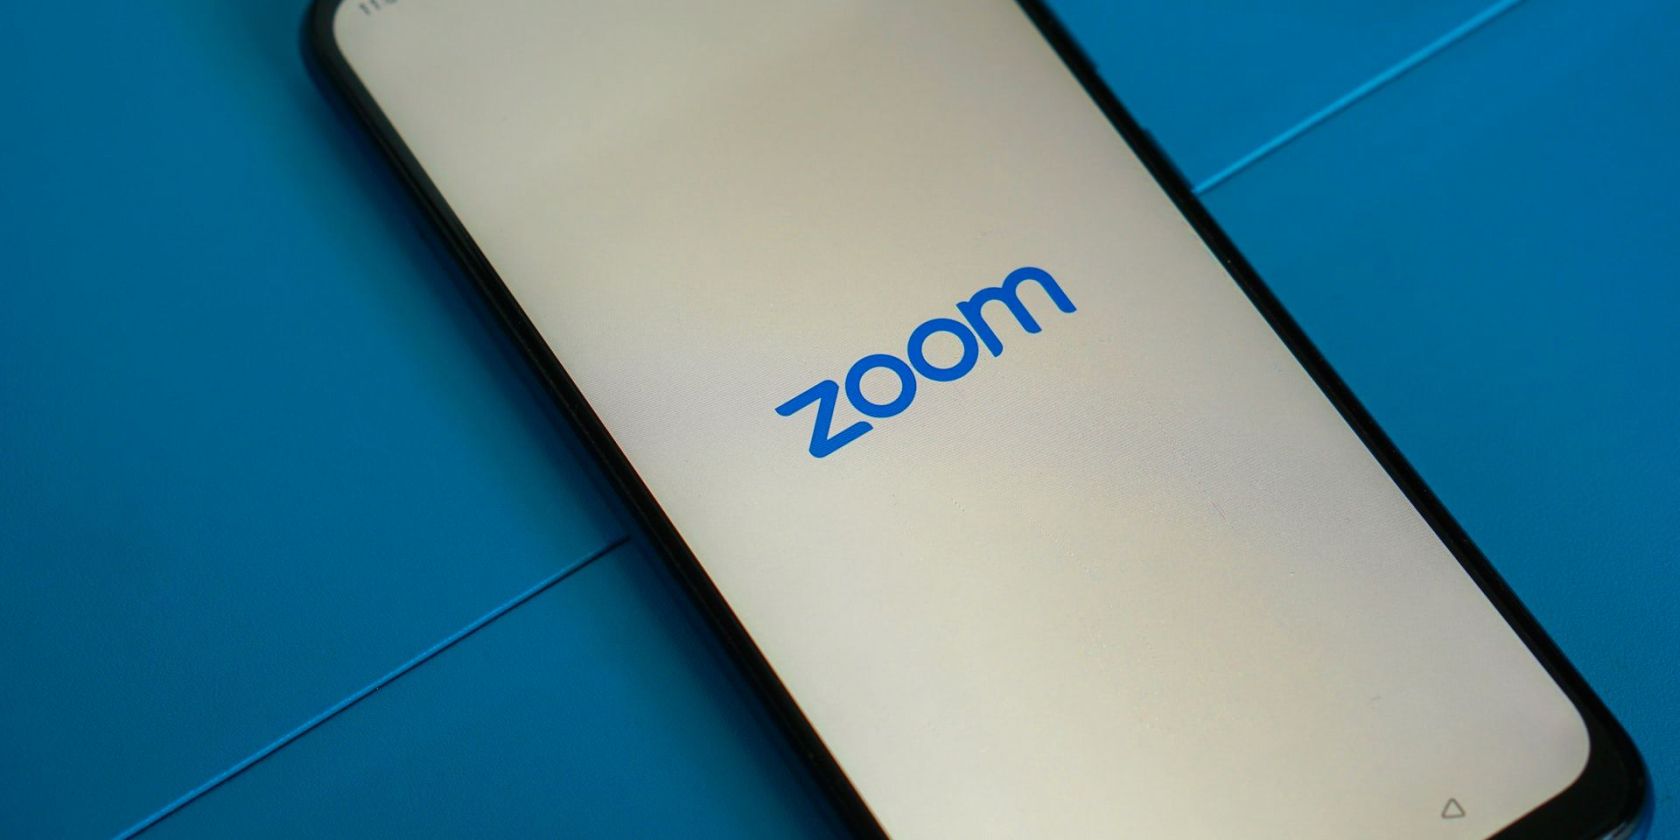 zoom logo on mobile